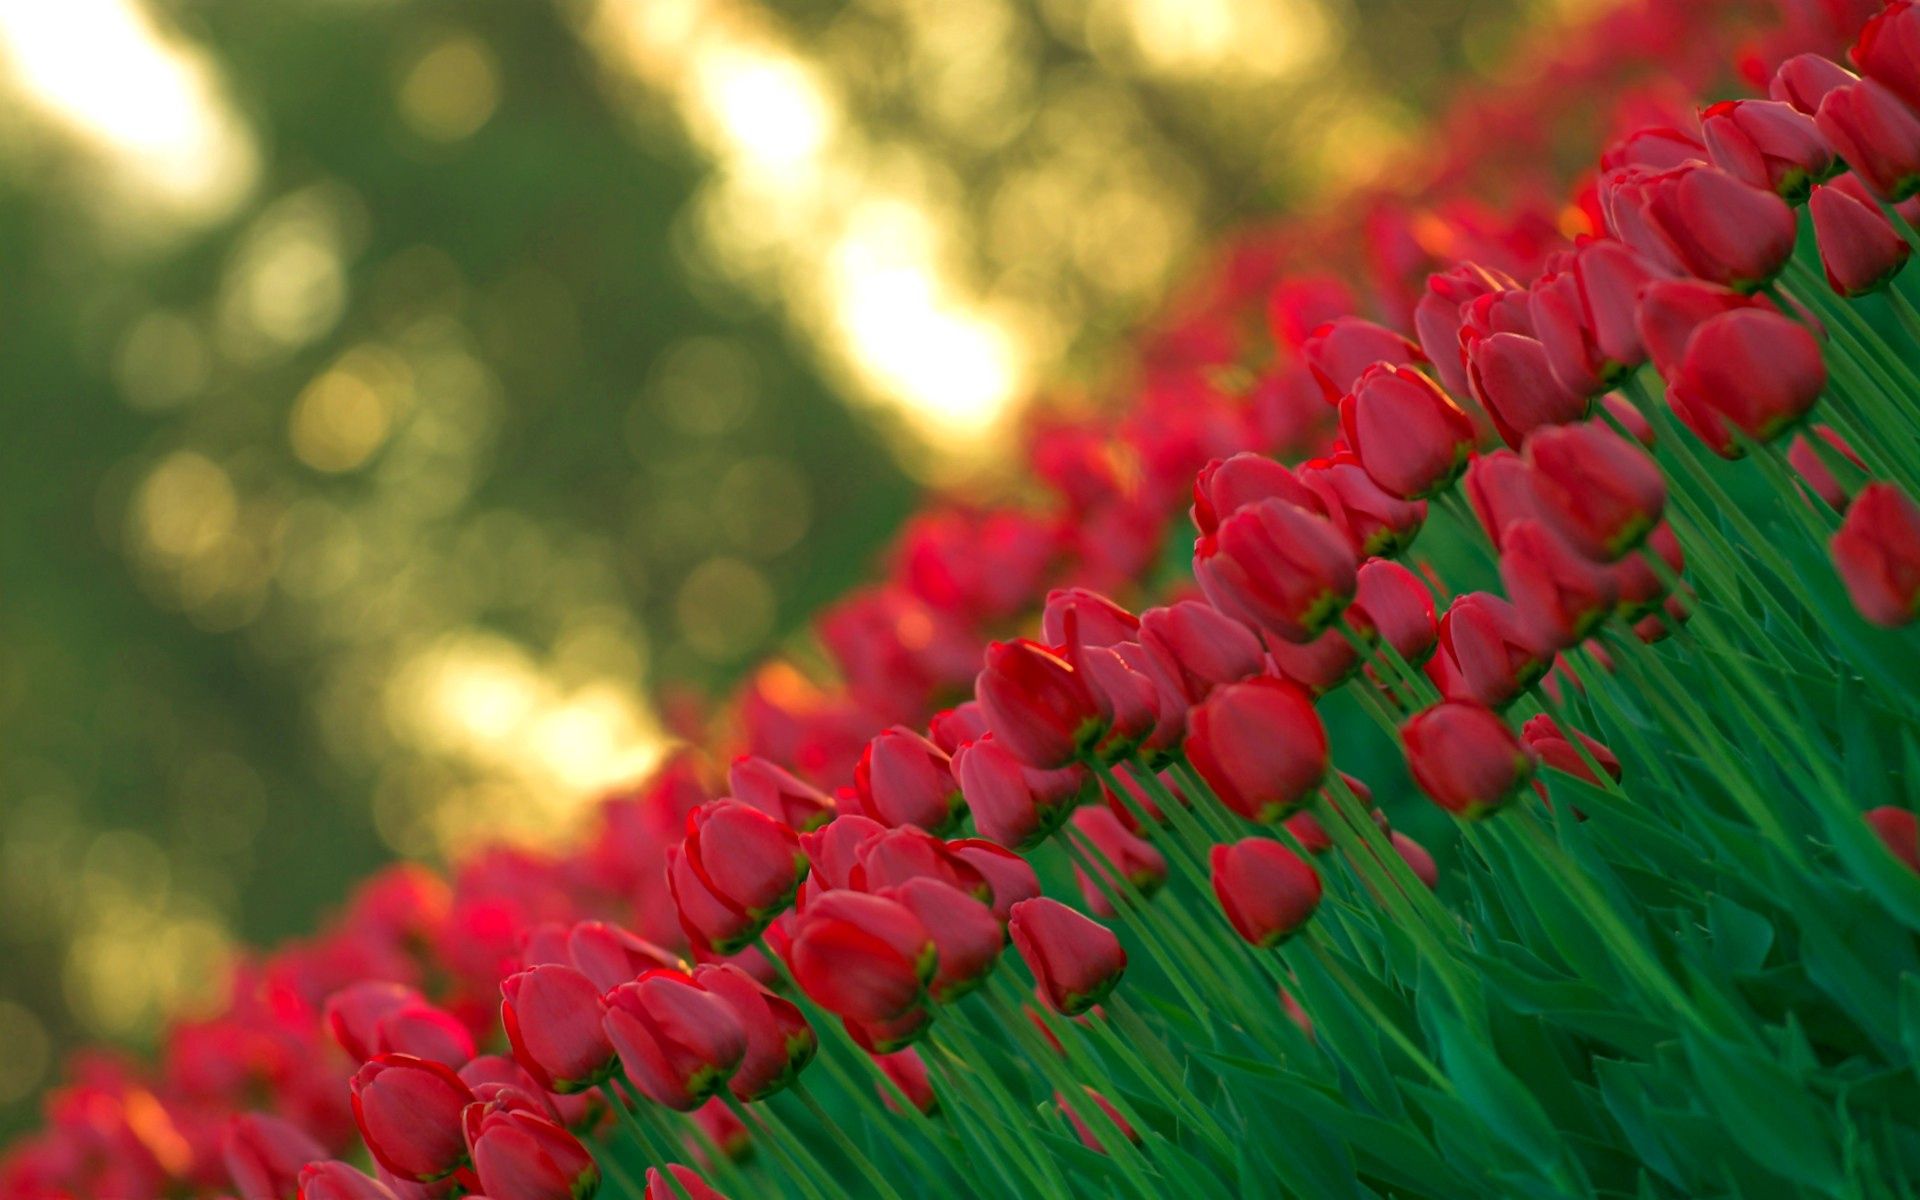 60636 descargar imagen flores, tulipanes, tiroteo, encuesta, ángulo, esquina, nitidez, agudeza: fondos de pantalla y protectores de pantalla gratis